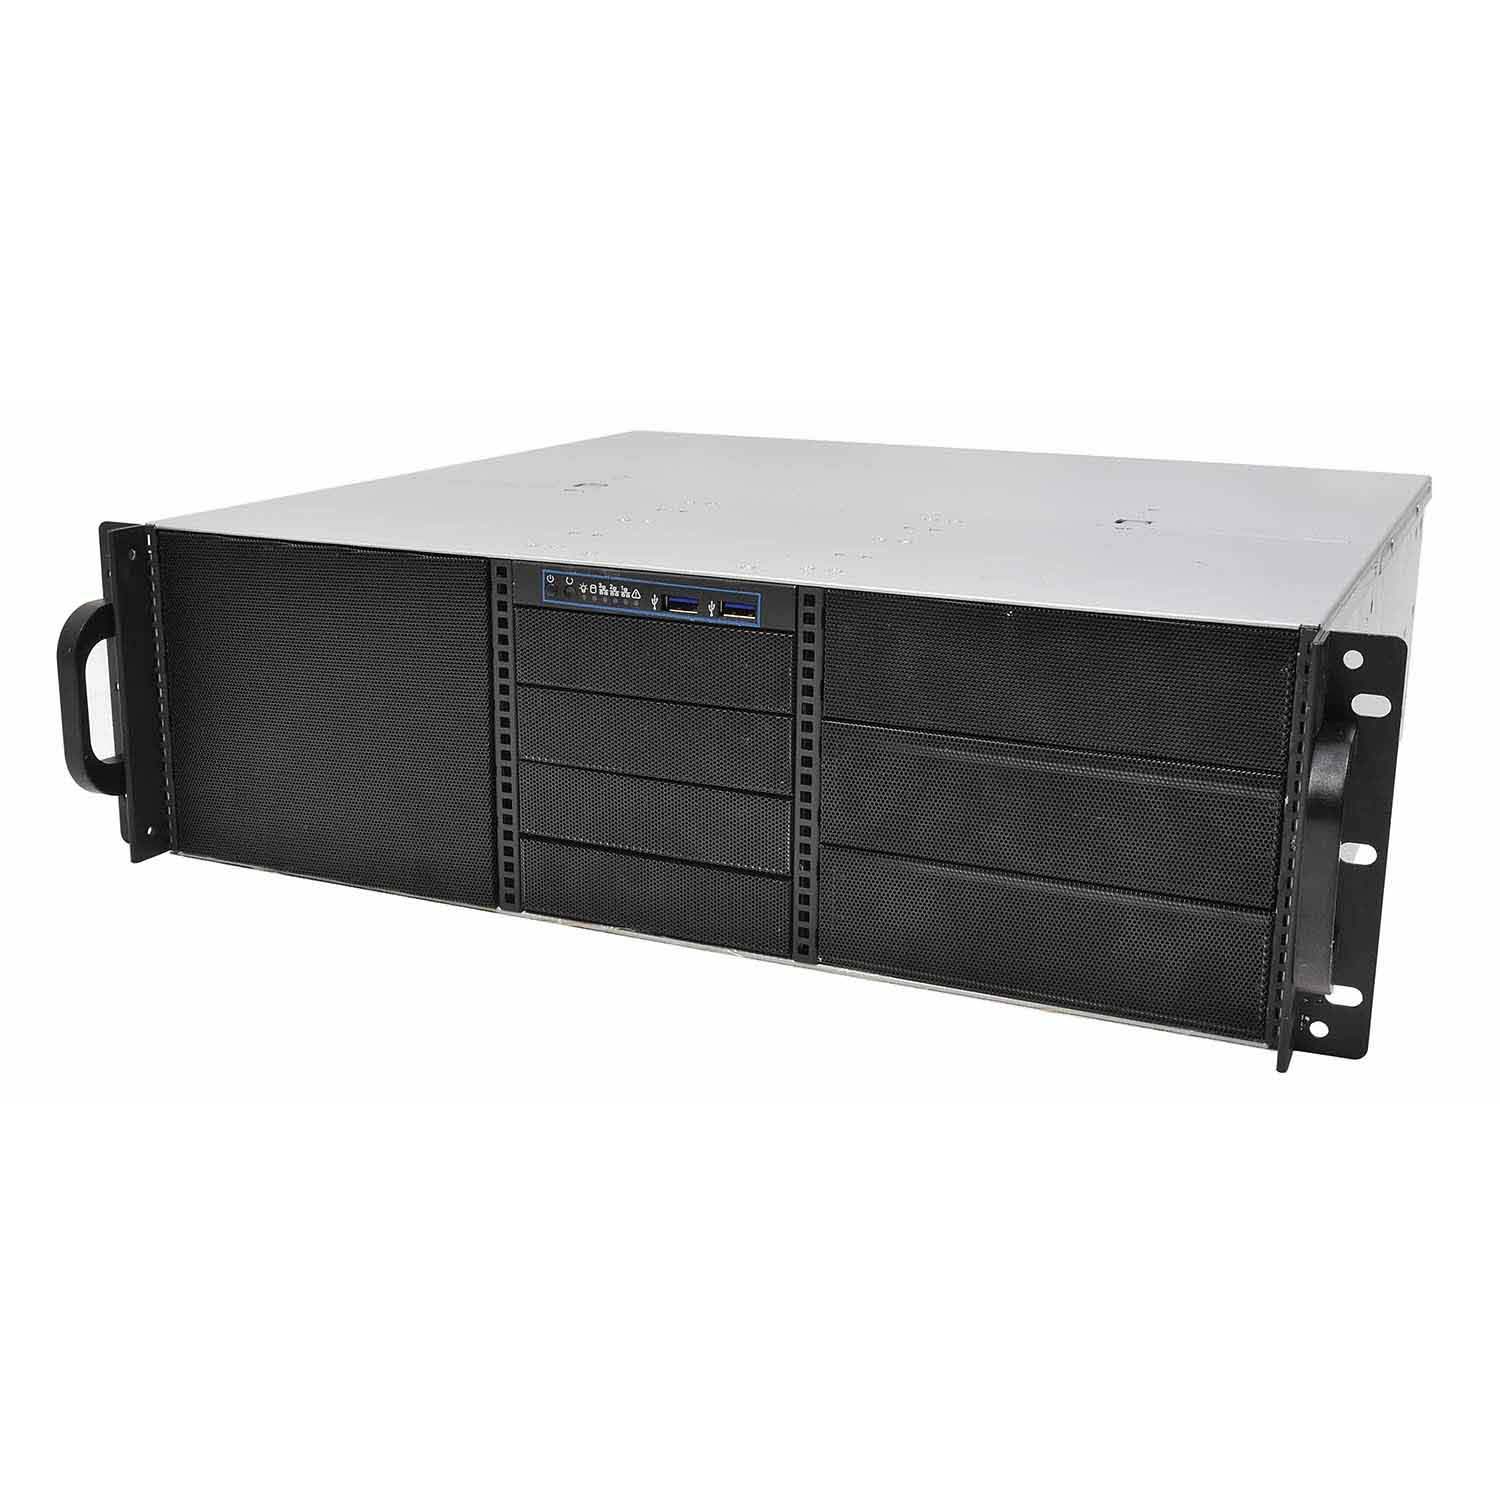 Серверный корпус 3U NR-N3414 2x800Вт (ATX12x13,6x5.25ext(10x3.5int),4x3.5ext,400мм)черный,NegoRack